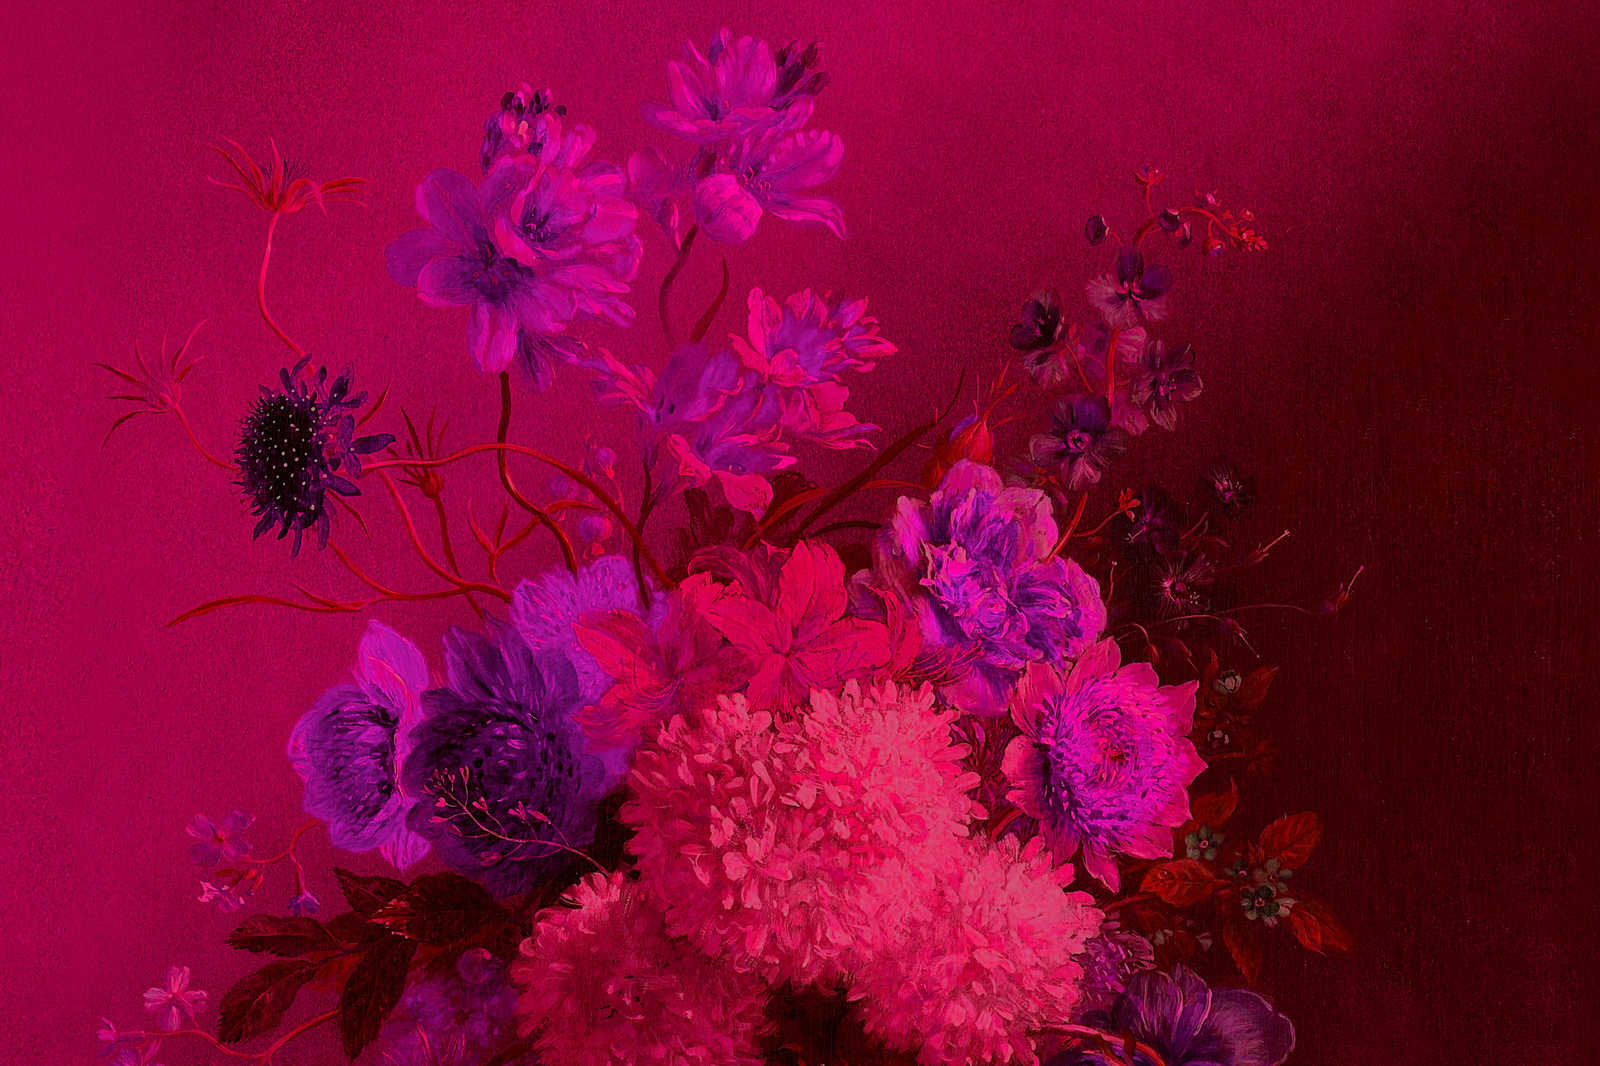             Lienzo neón Pintura con flores Naturaleza muerta | bouquet Vibran 2 - 0,90 m x 0,60 m
        